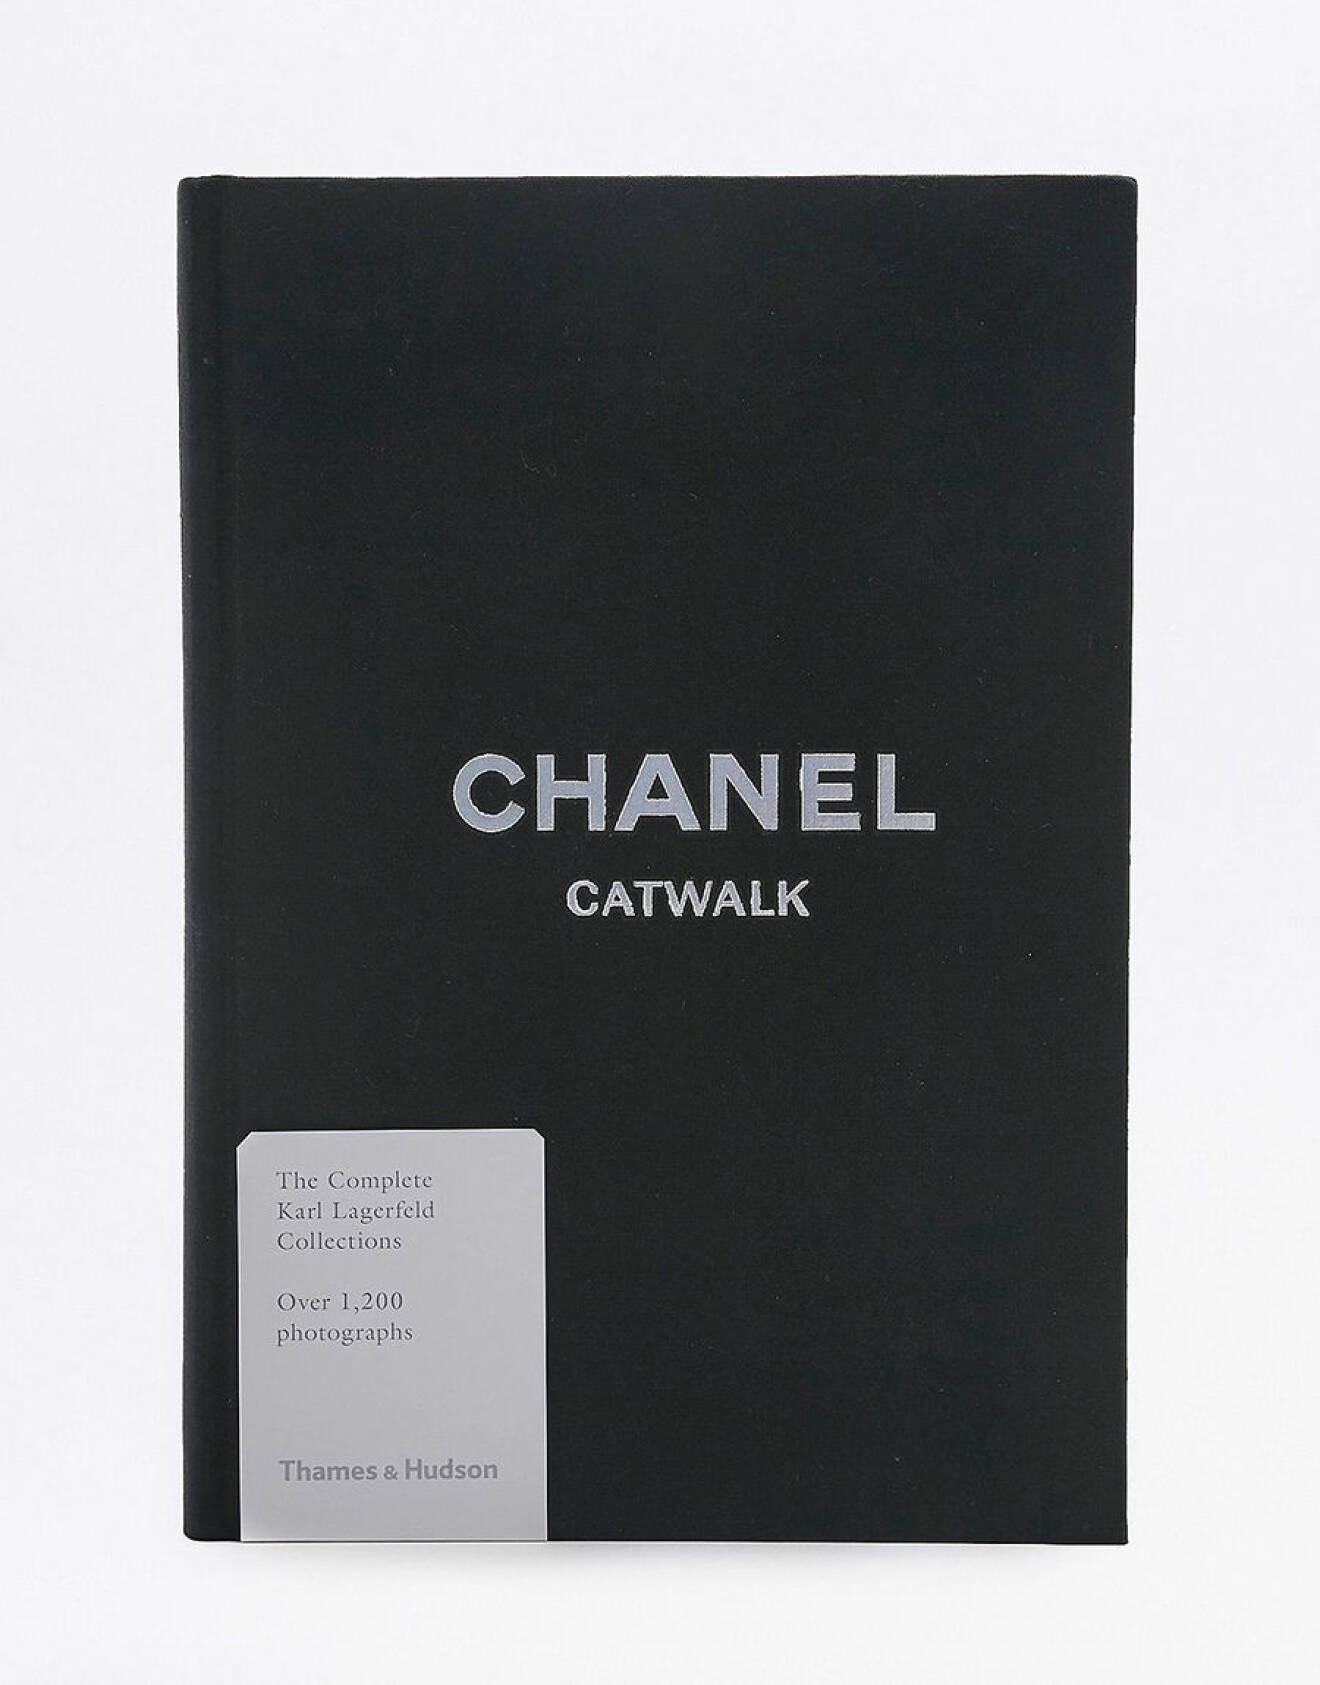 Chanel catwalk coffeetable bok